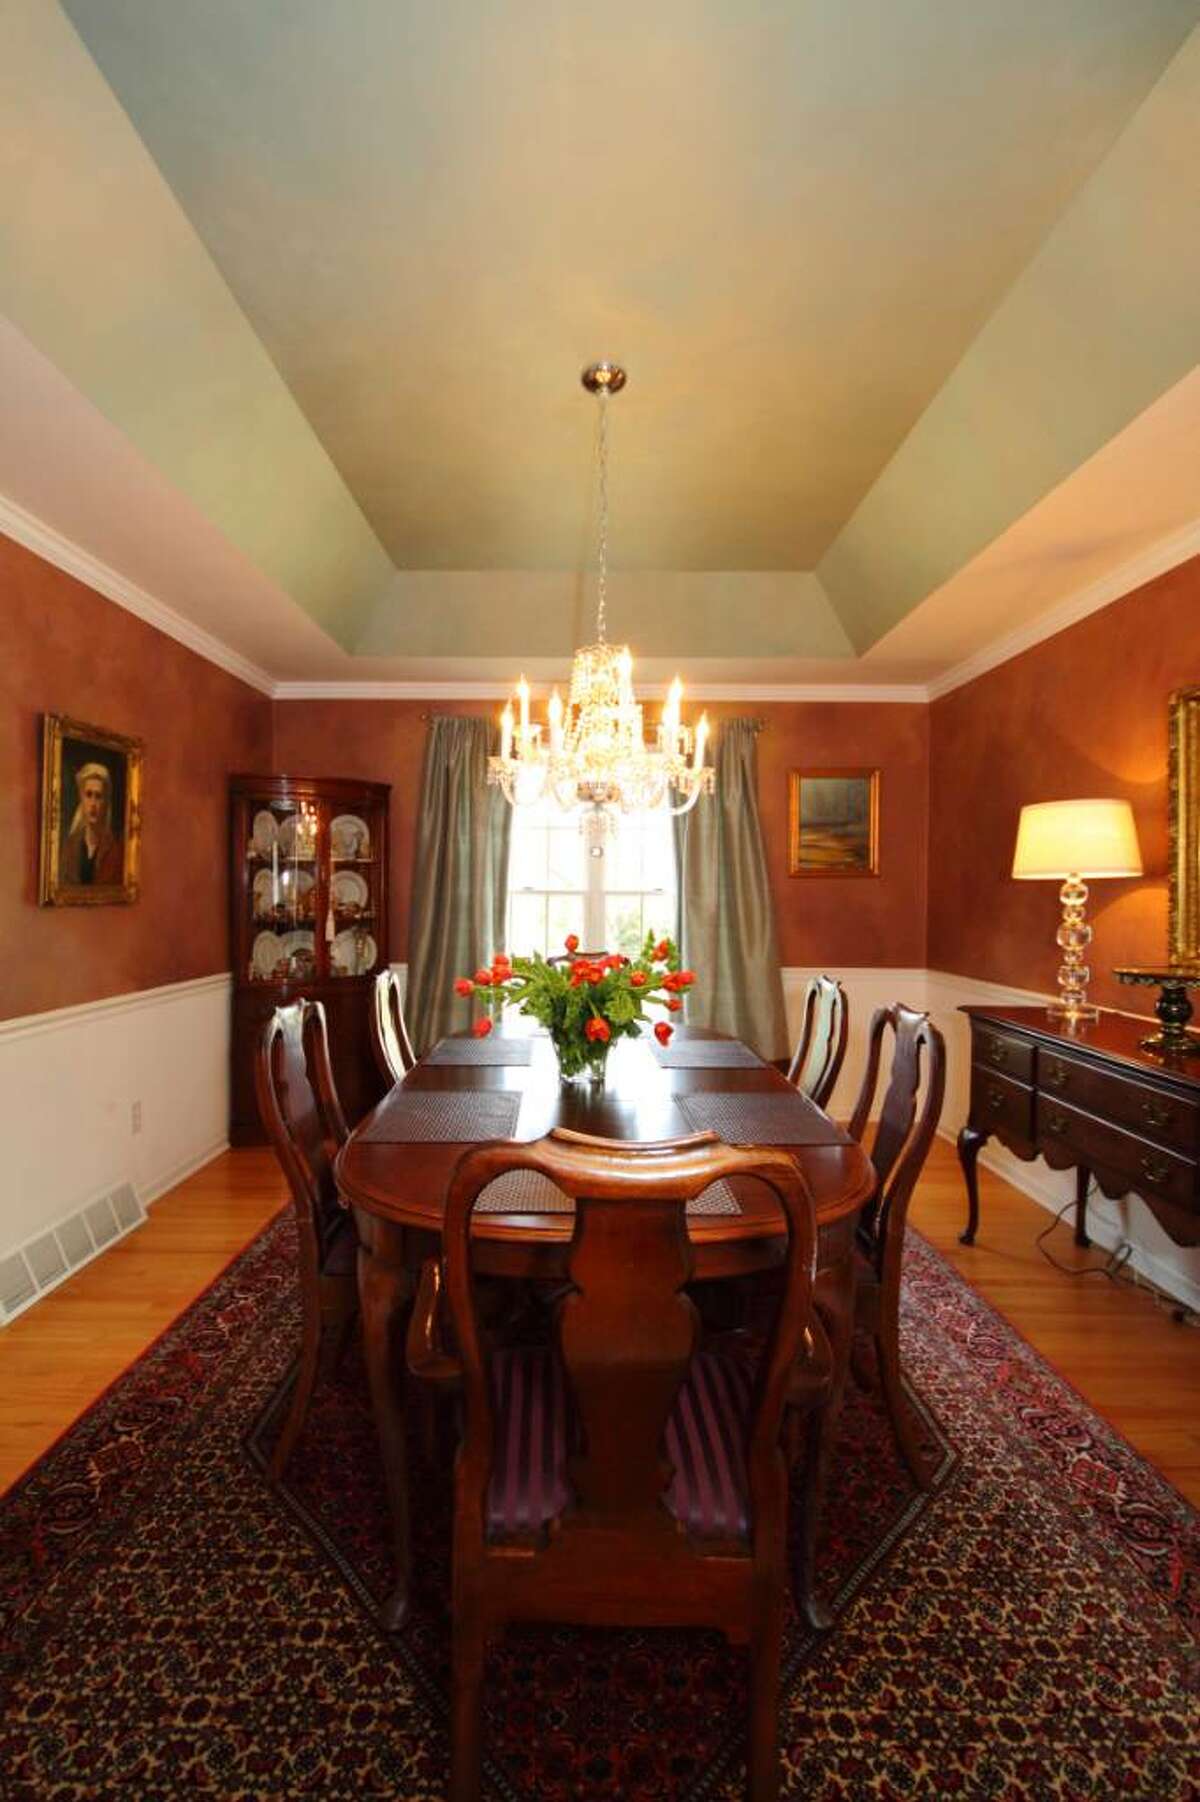 Details make the difference in designer Deidre Gatta's home. (Nancy Bruno / Life at Home)